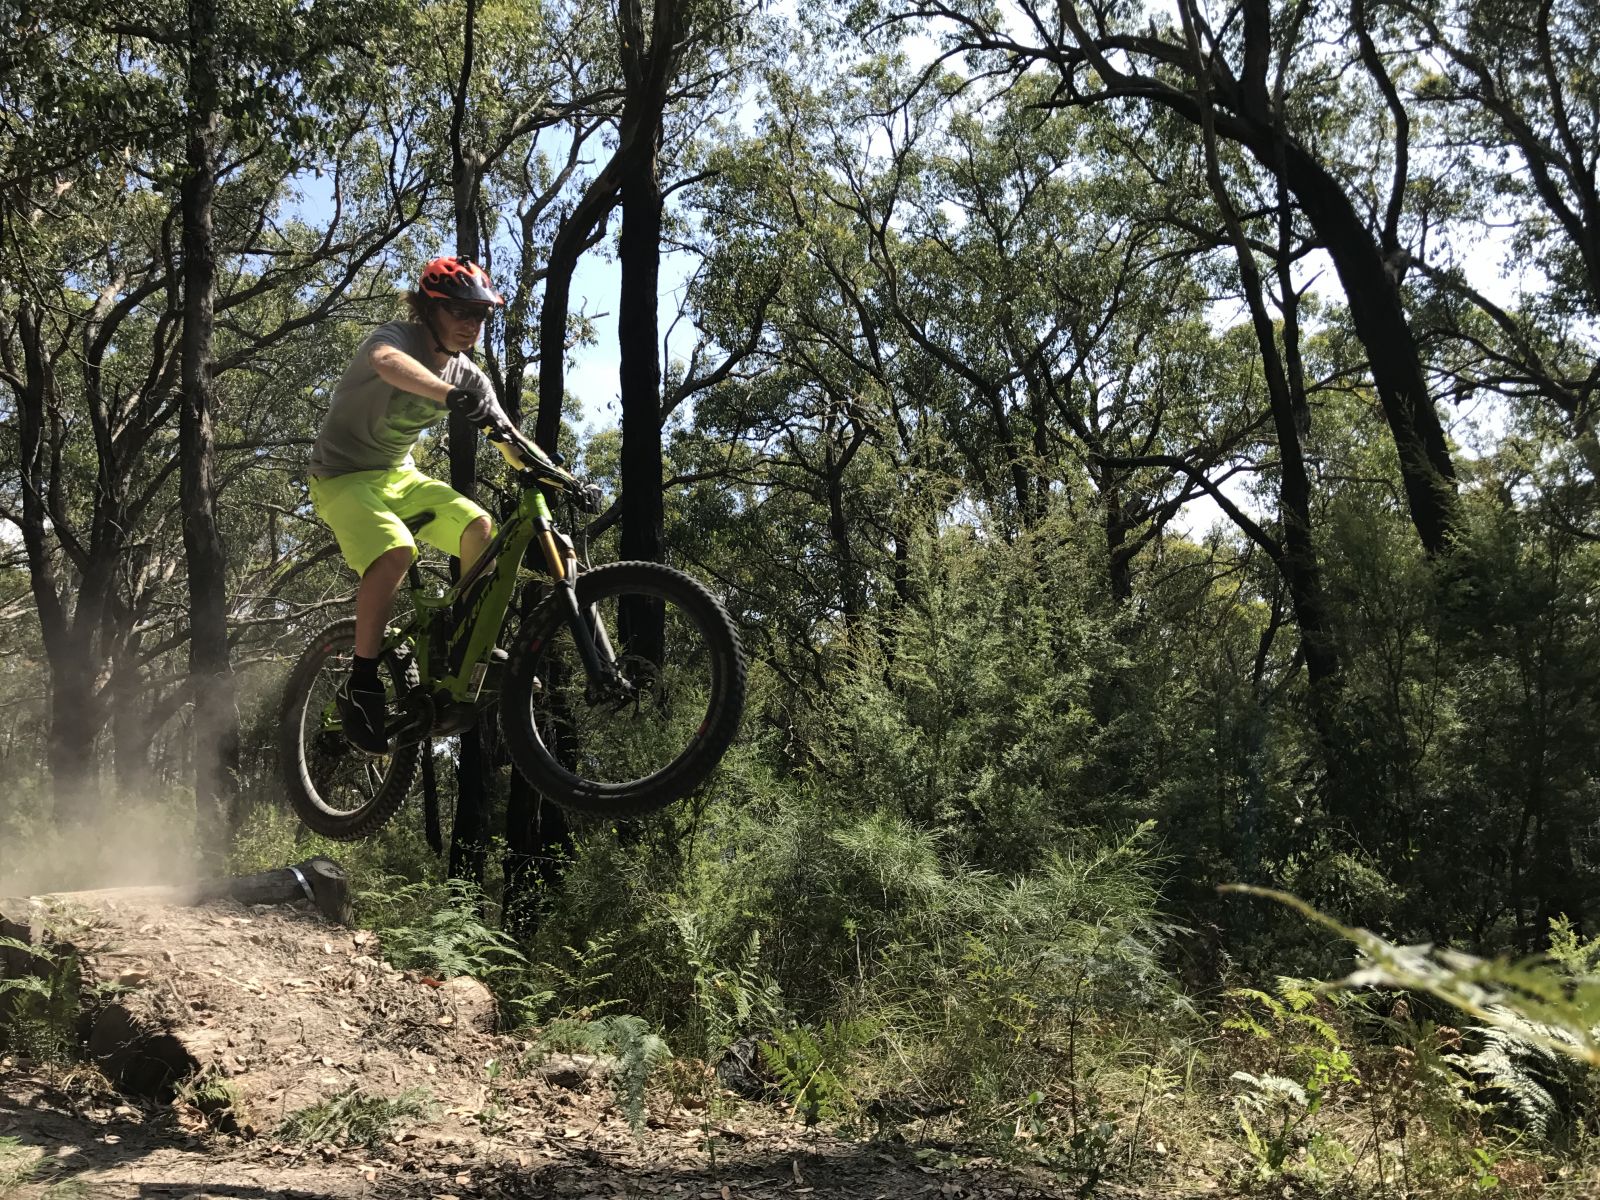 A man rides his mountain bike along a dirt track